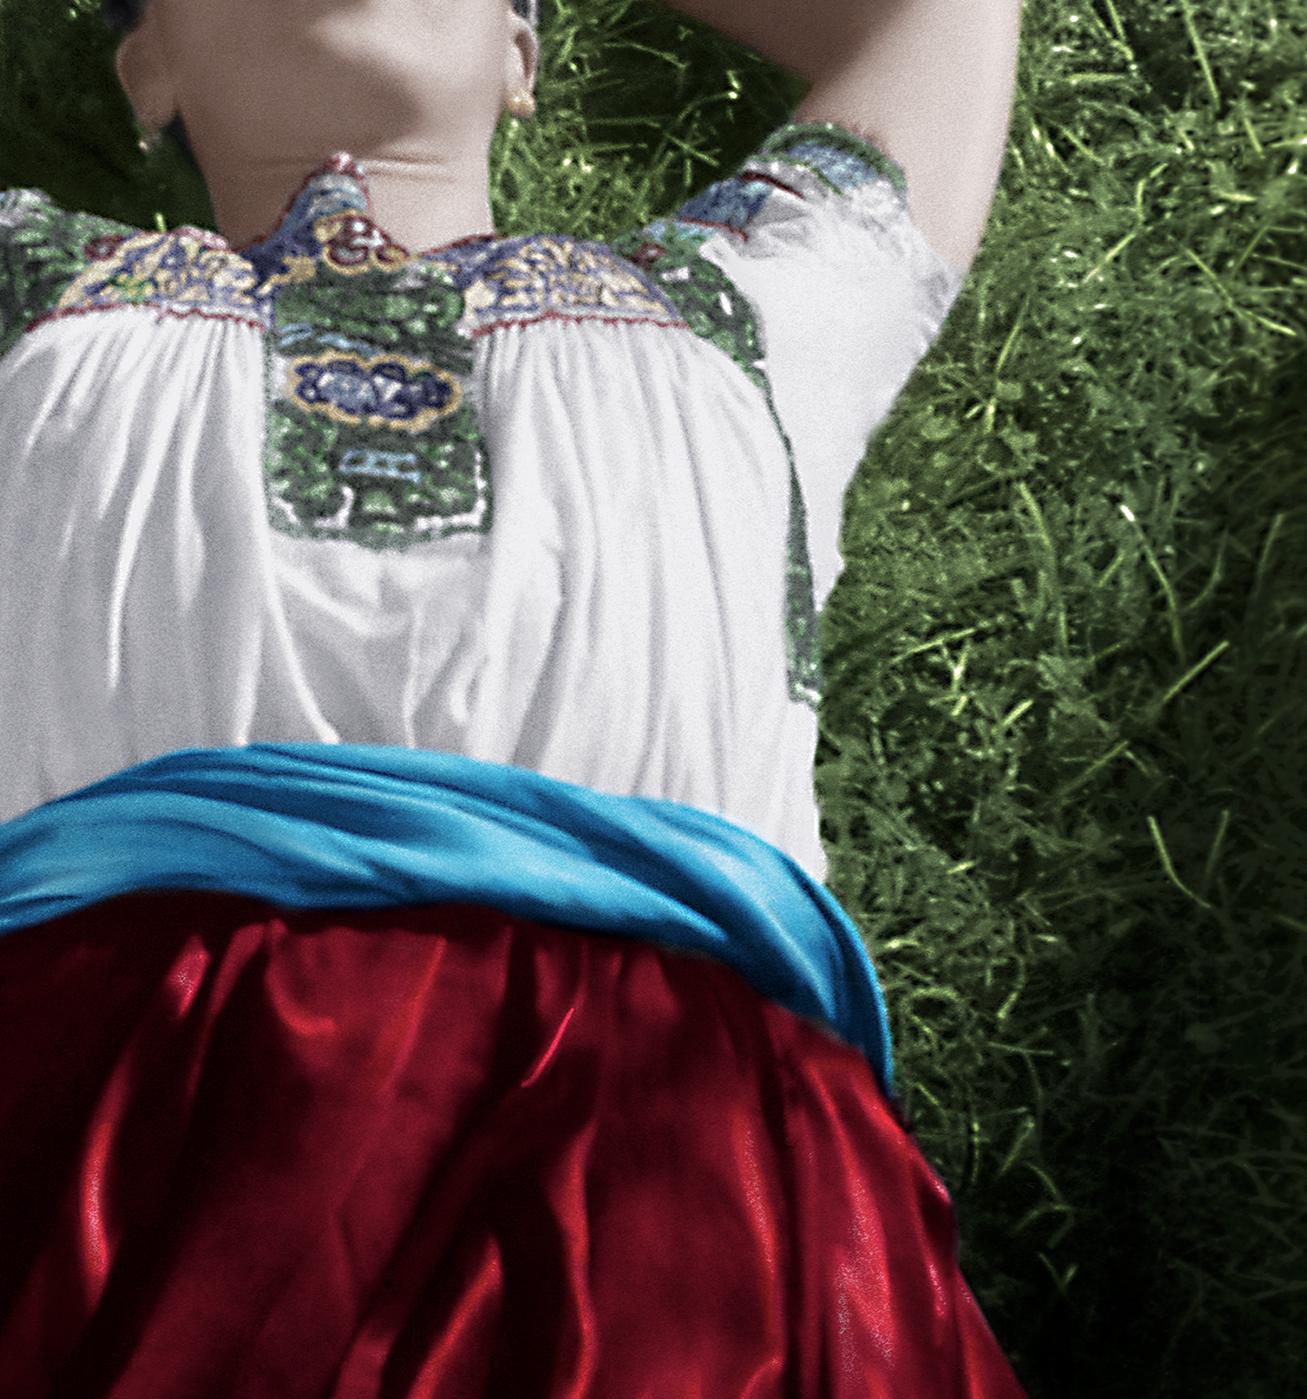 frida kahlo color photo